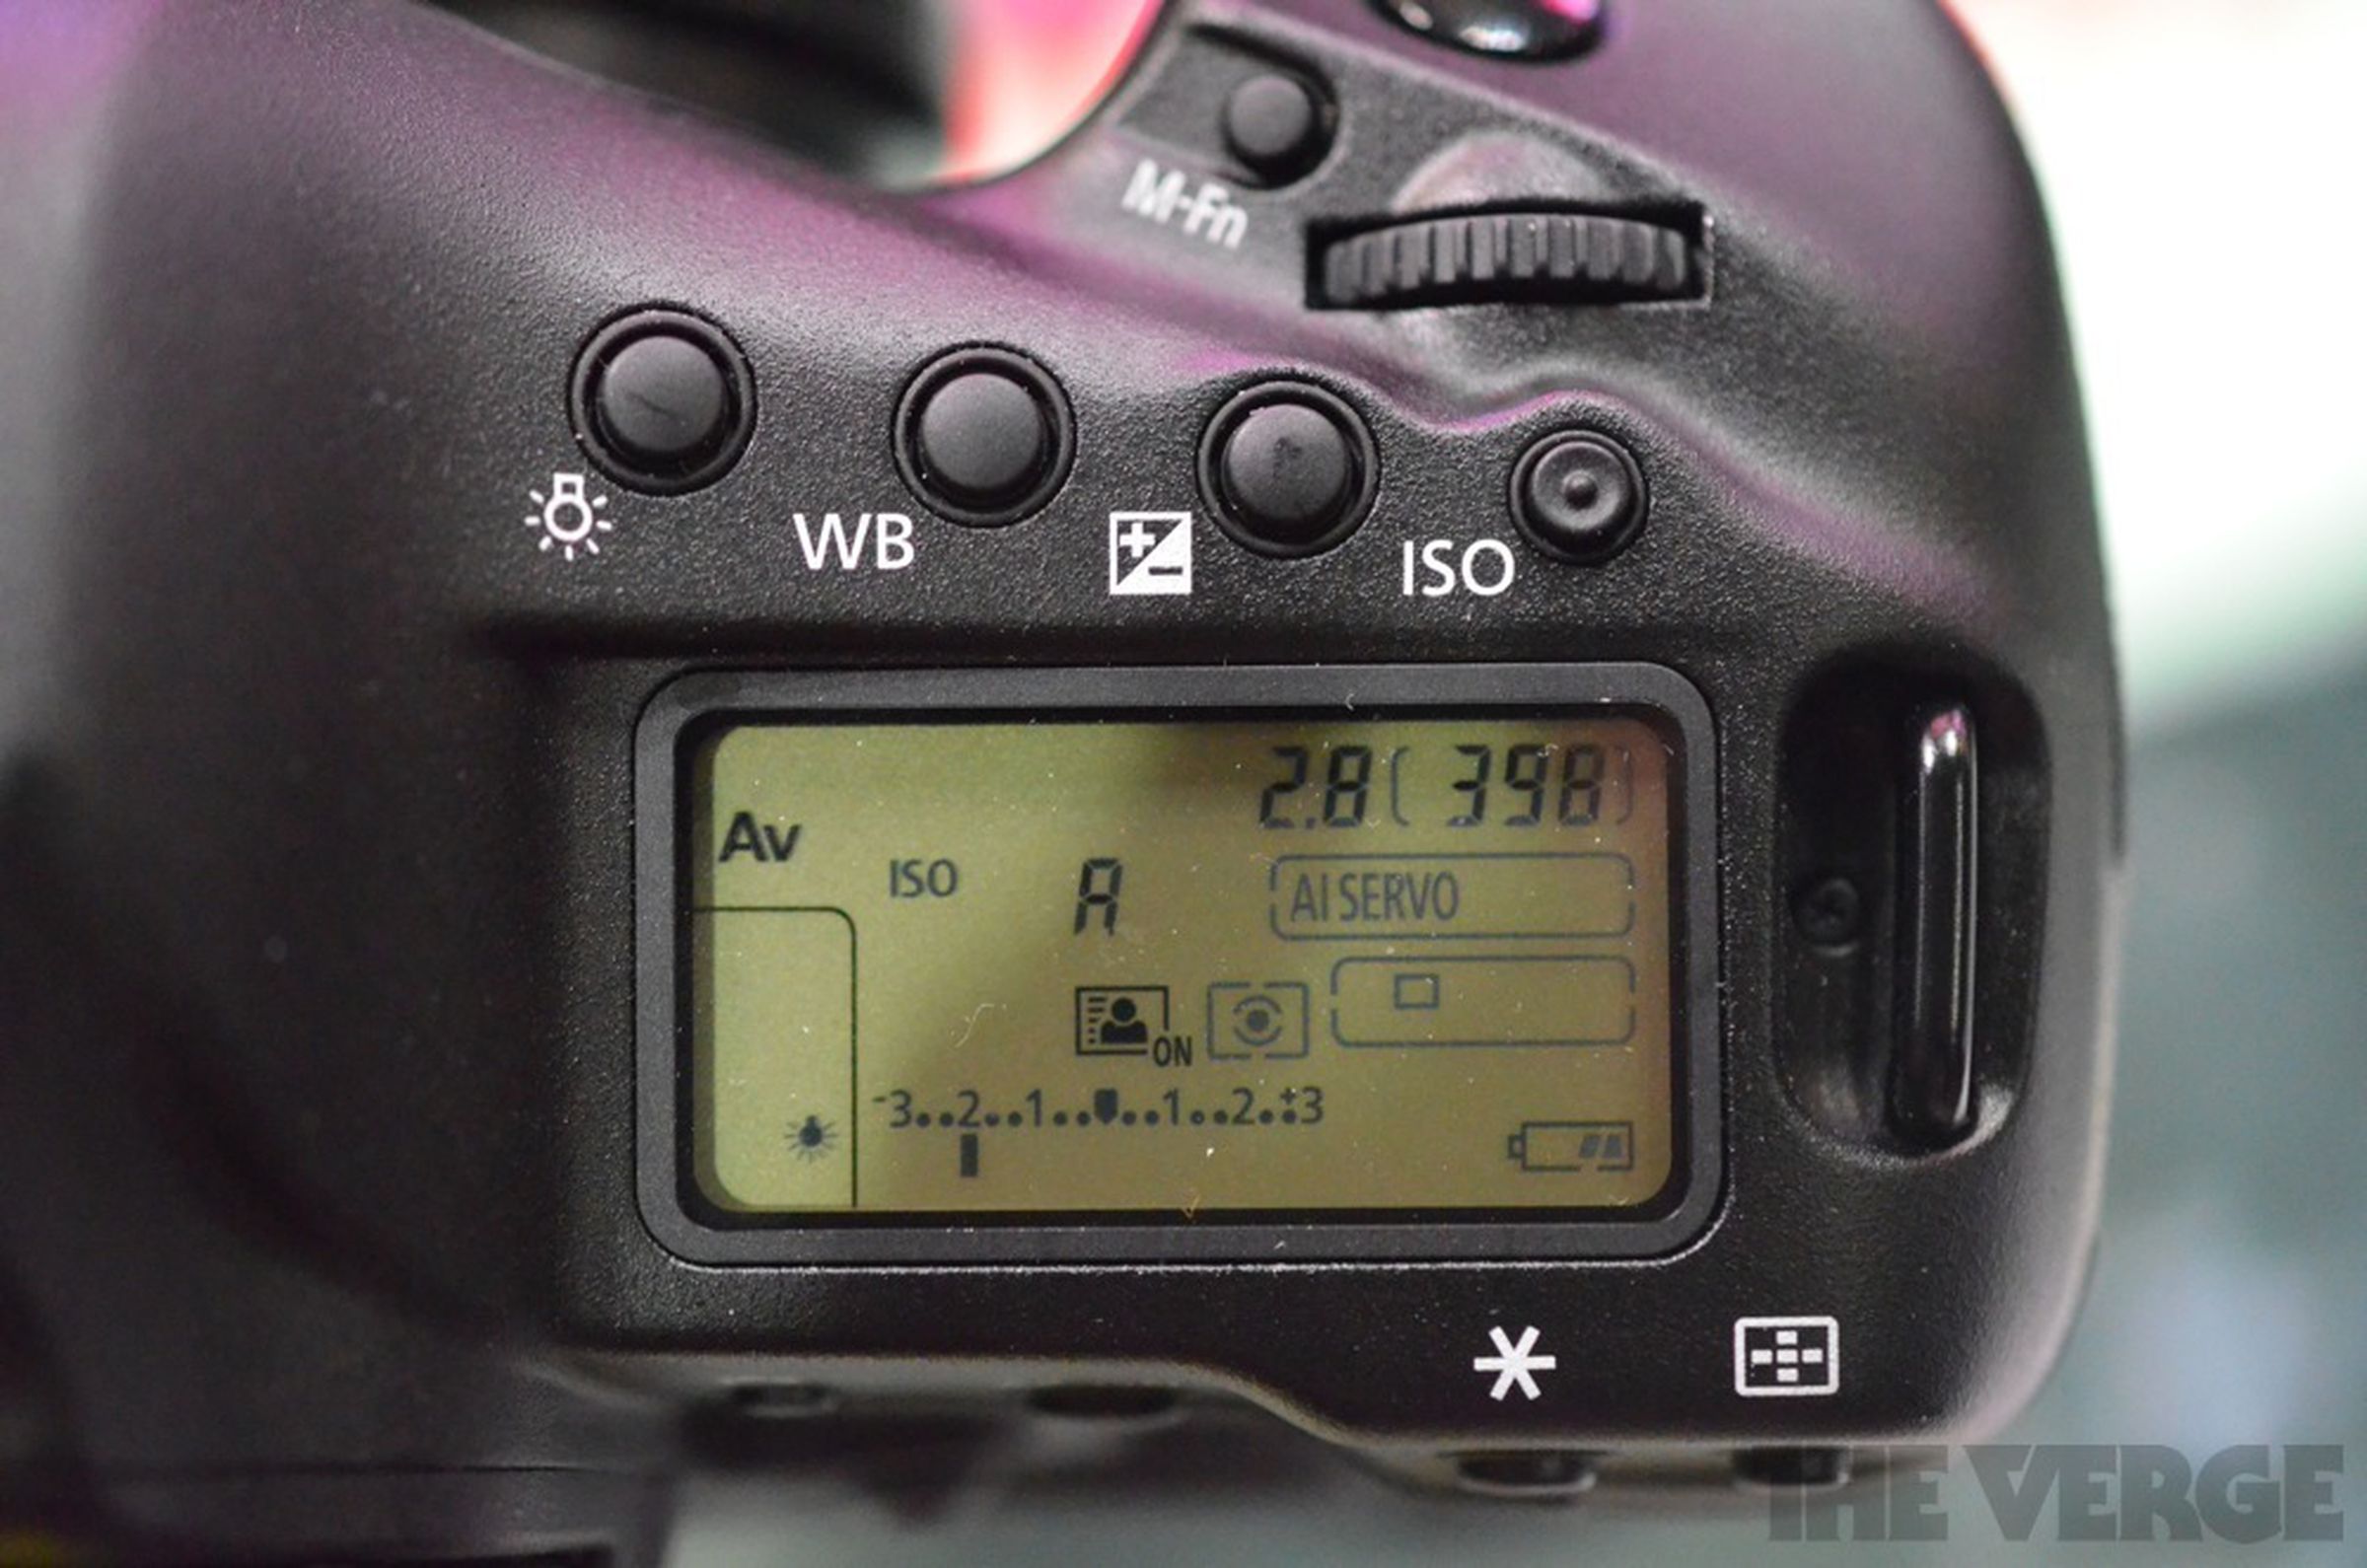 Canon EOS-1D X hands-on photos